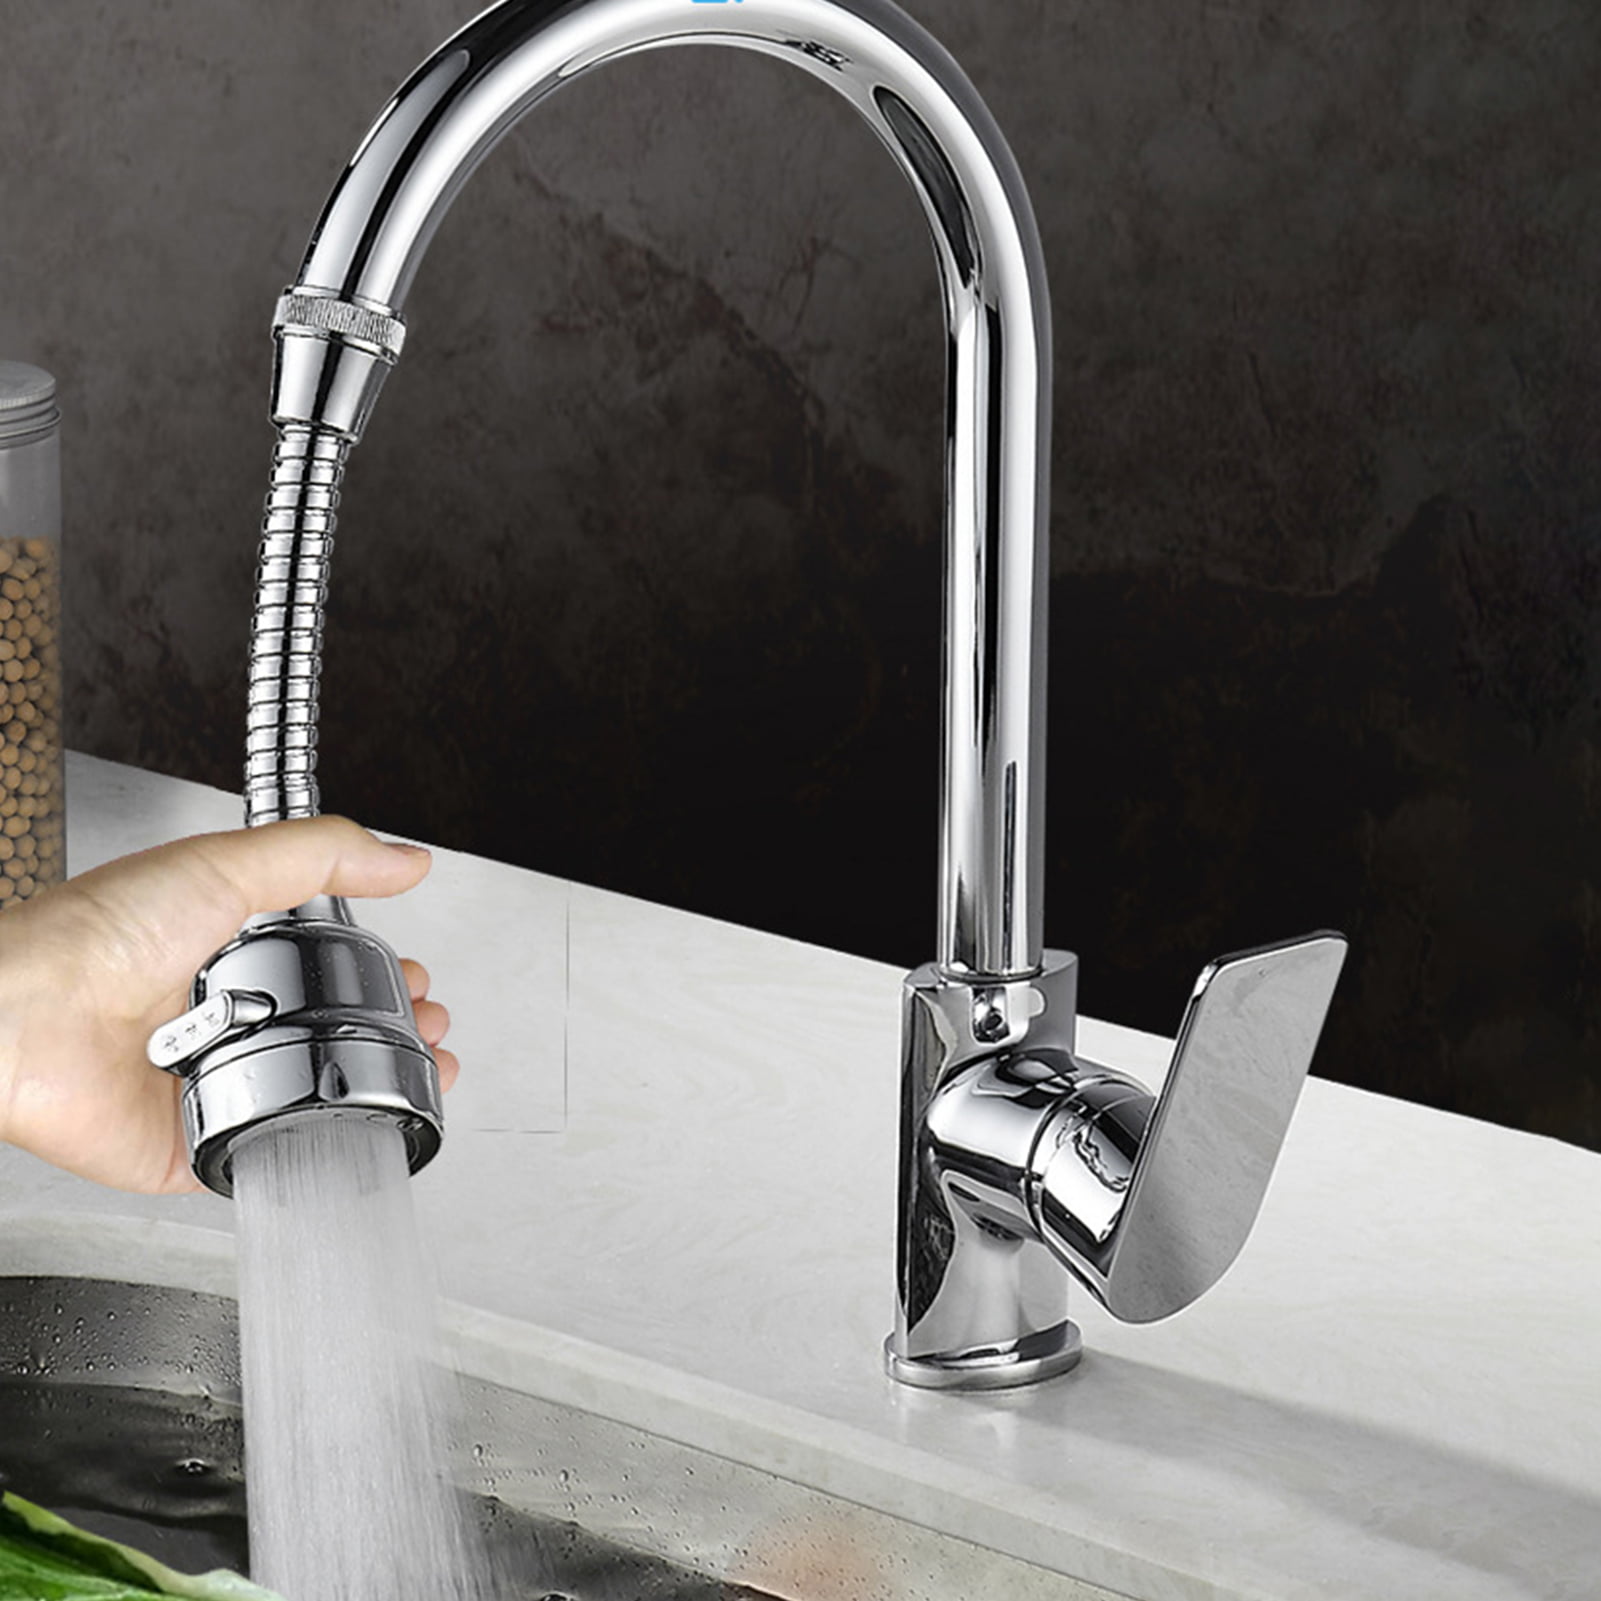 Details about   Splash Proof Spray Head  Replacement 360° Rotationl Kitchen Sink Faucet Tap Part 